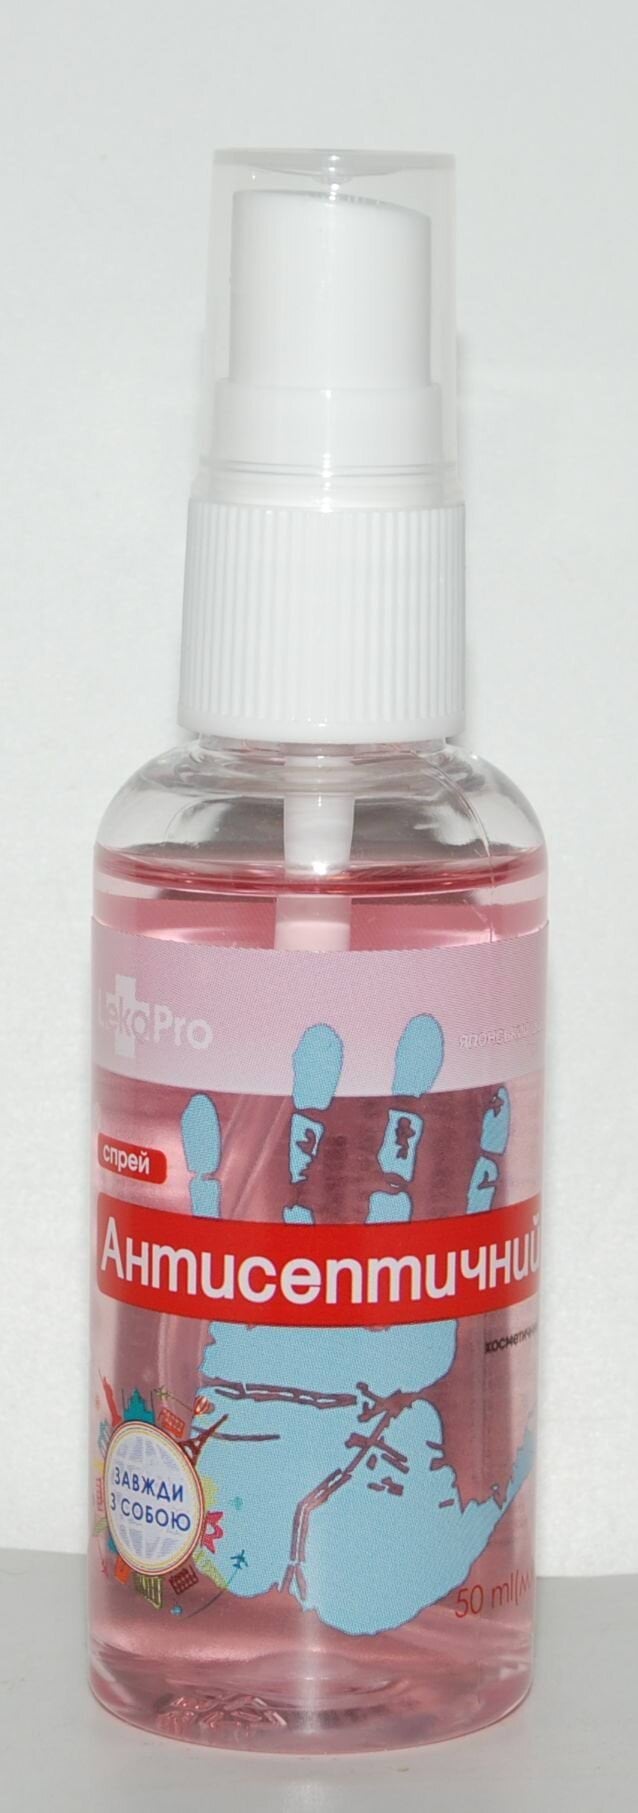 Спрей LekoPro для рук антисептический Японский шелк, 50 мл